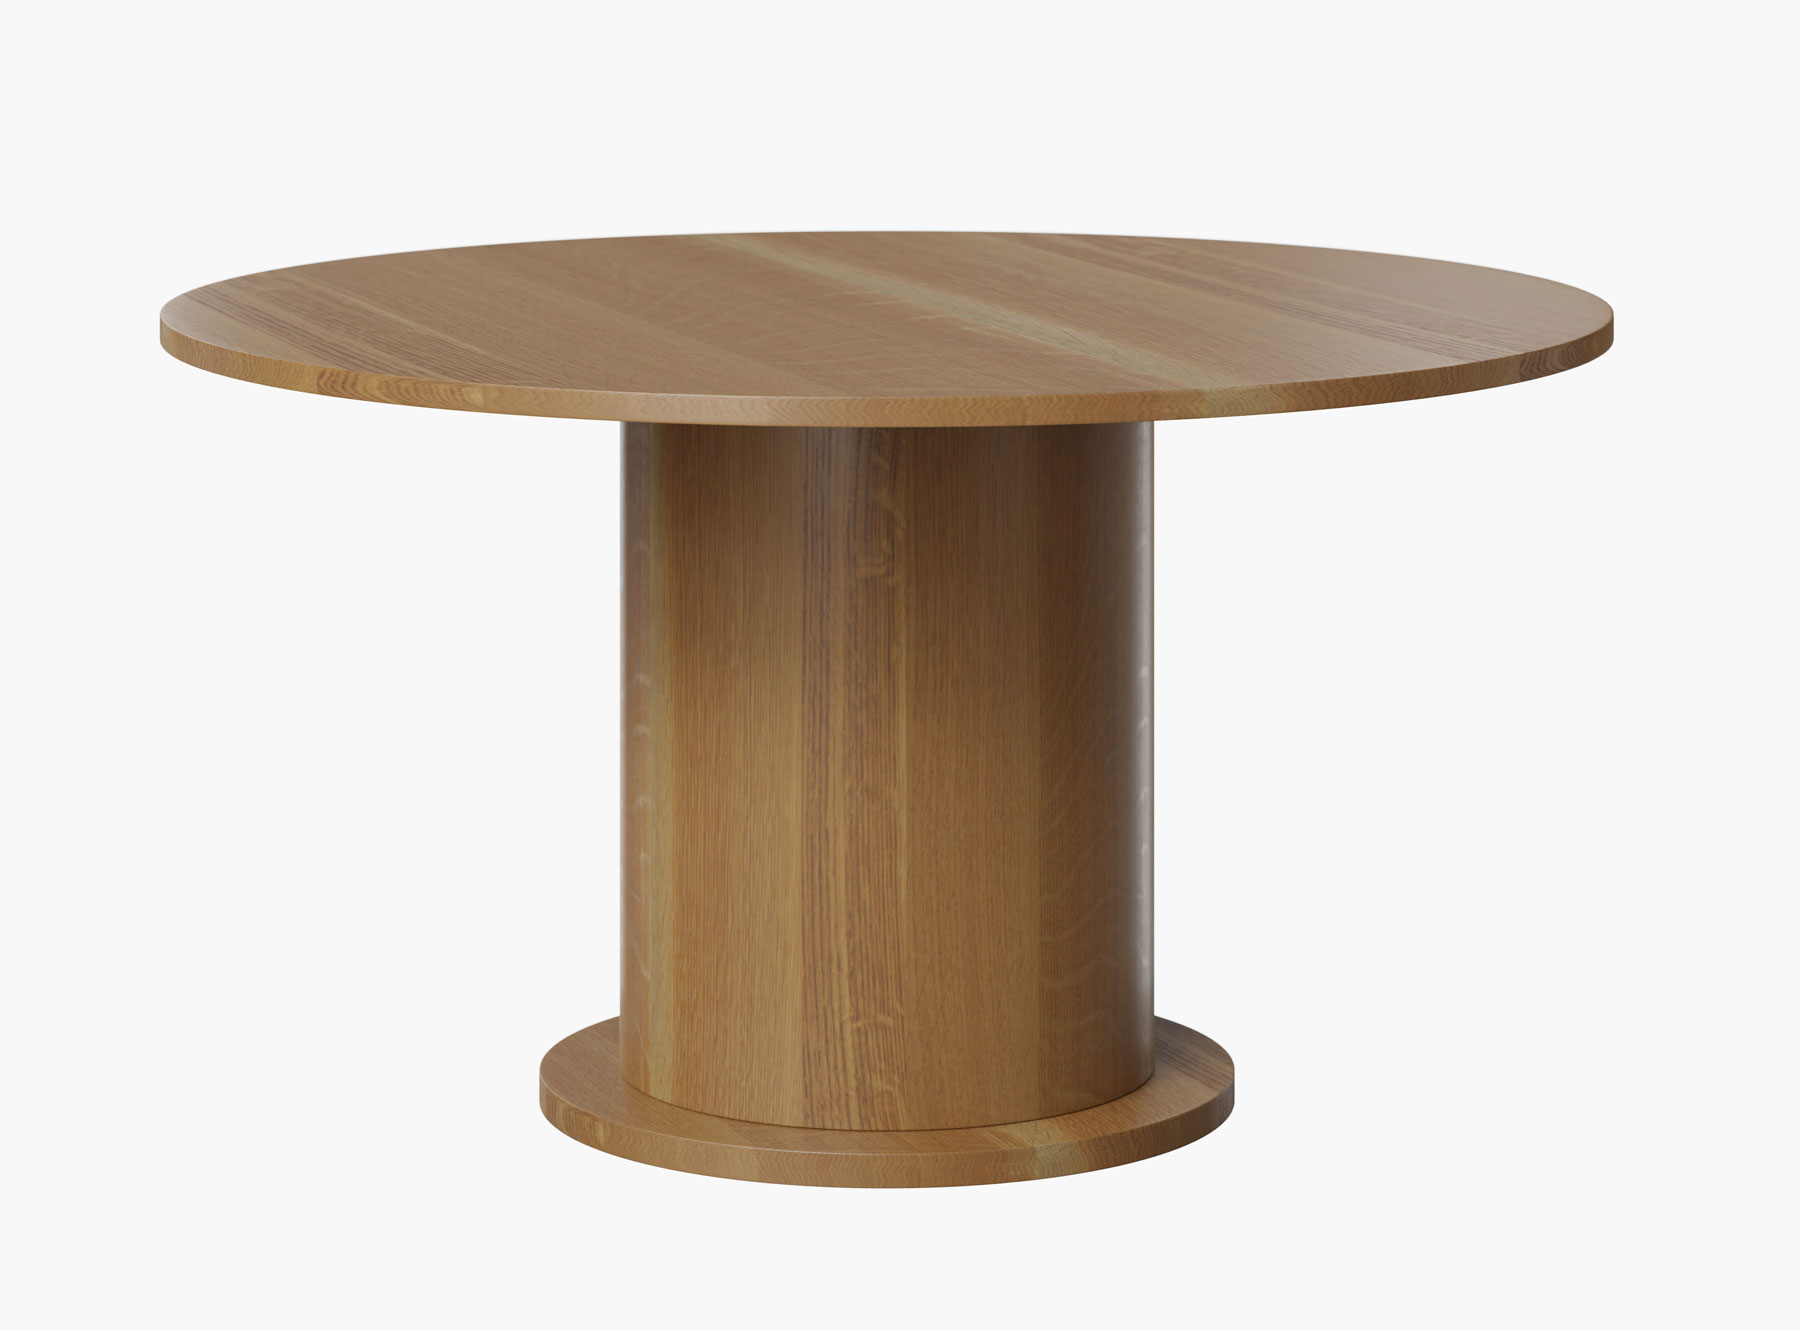 Tulsa Single Pedestal Table shown in Quartersawn White Oak with OCS-Natural Finish.